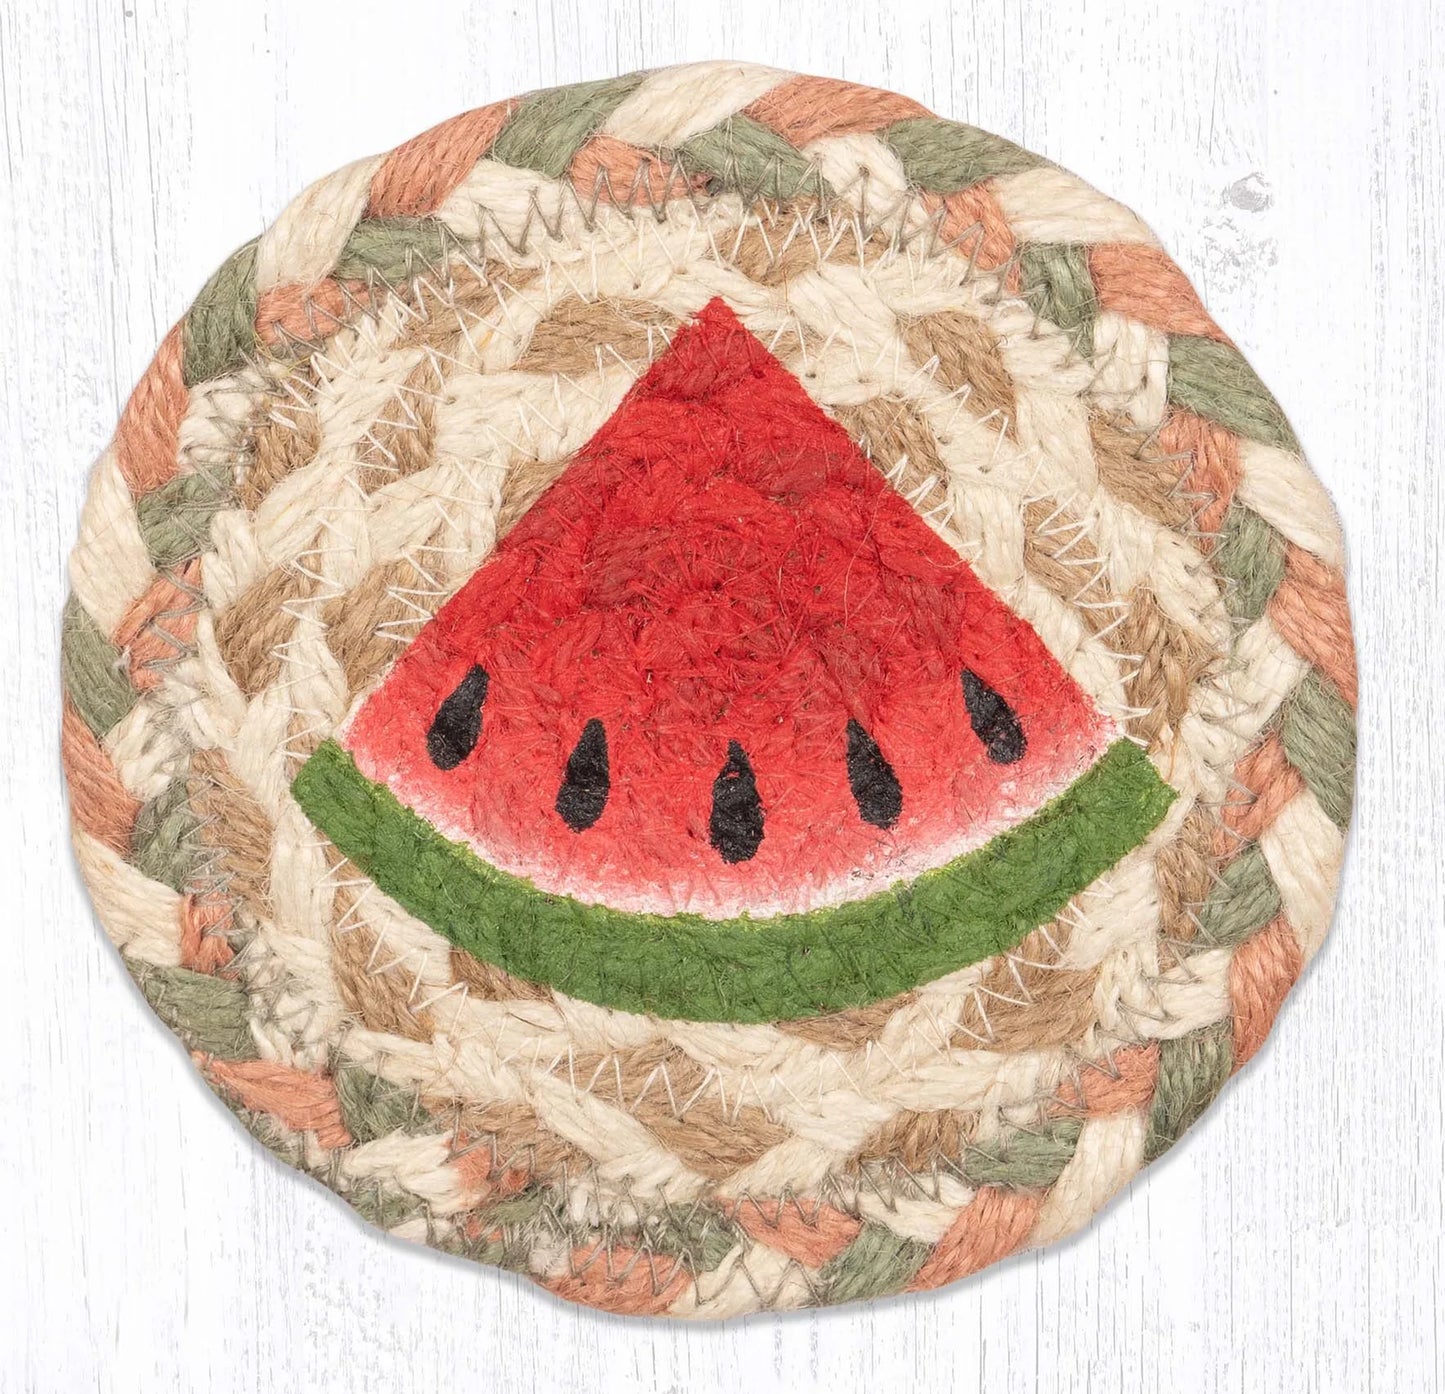 5" Round Hand Stenciled Coaster with Watermelon Design